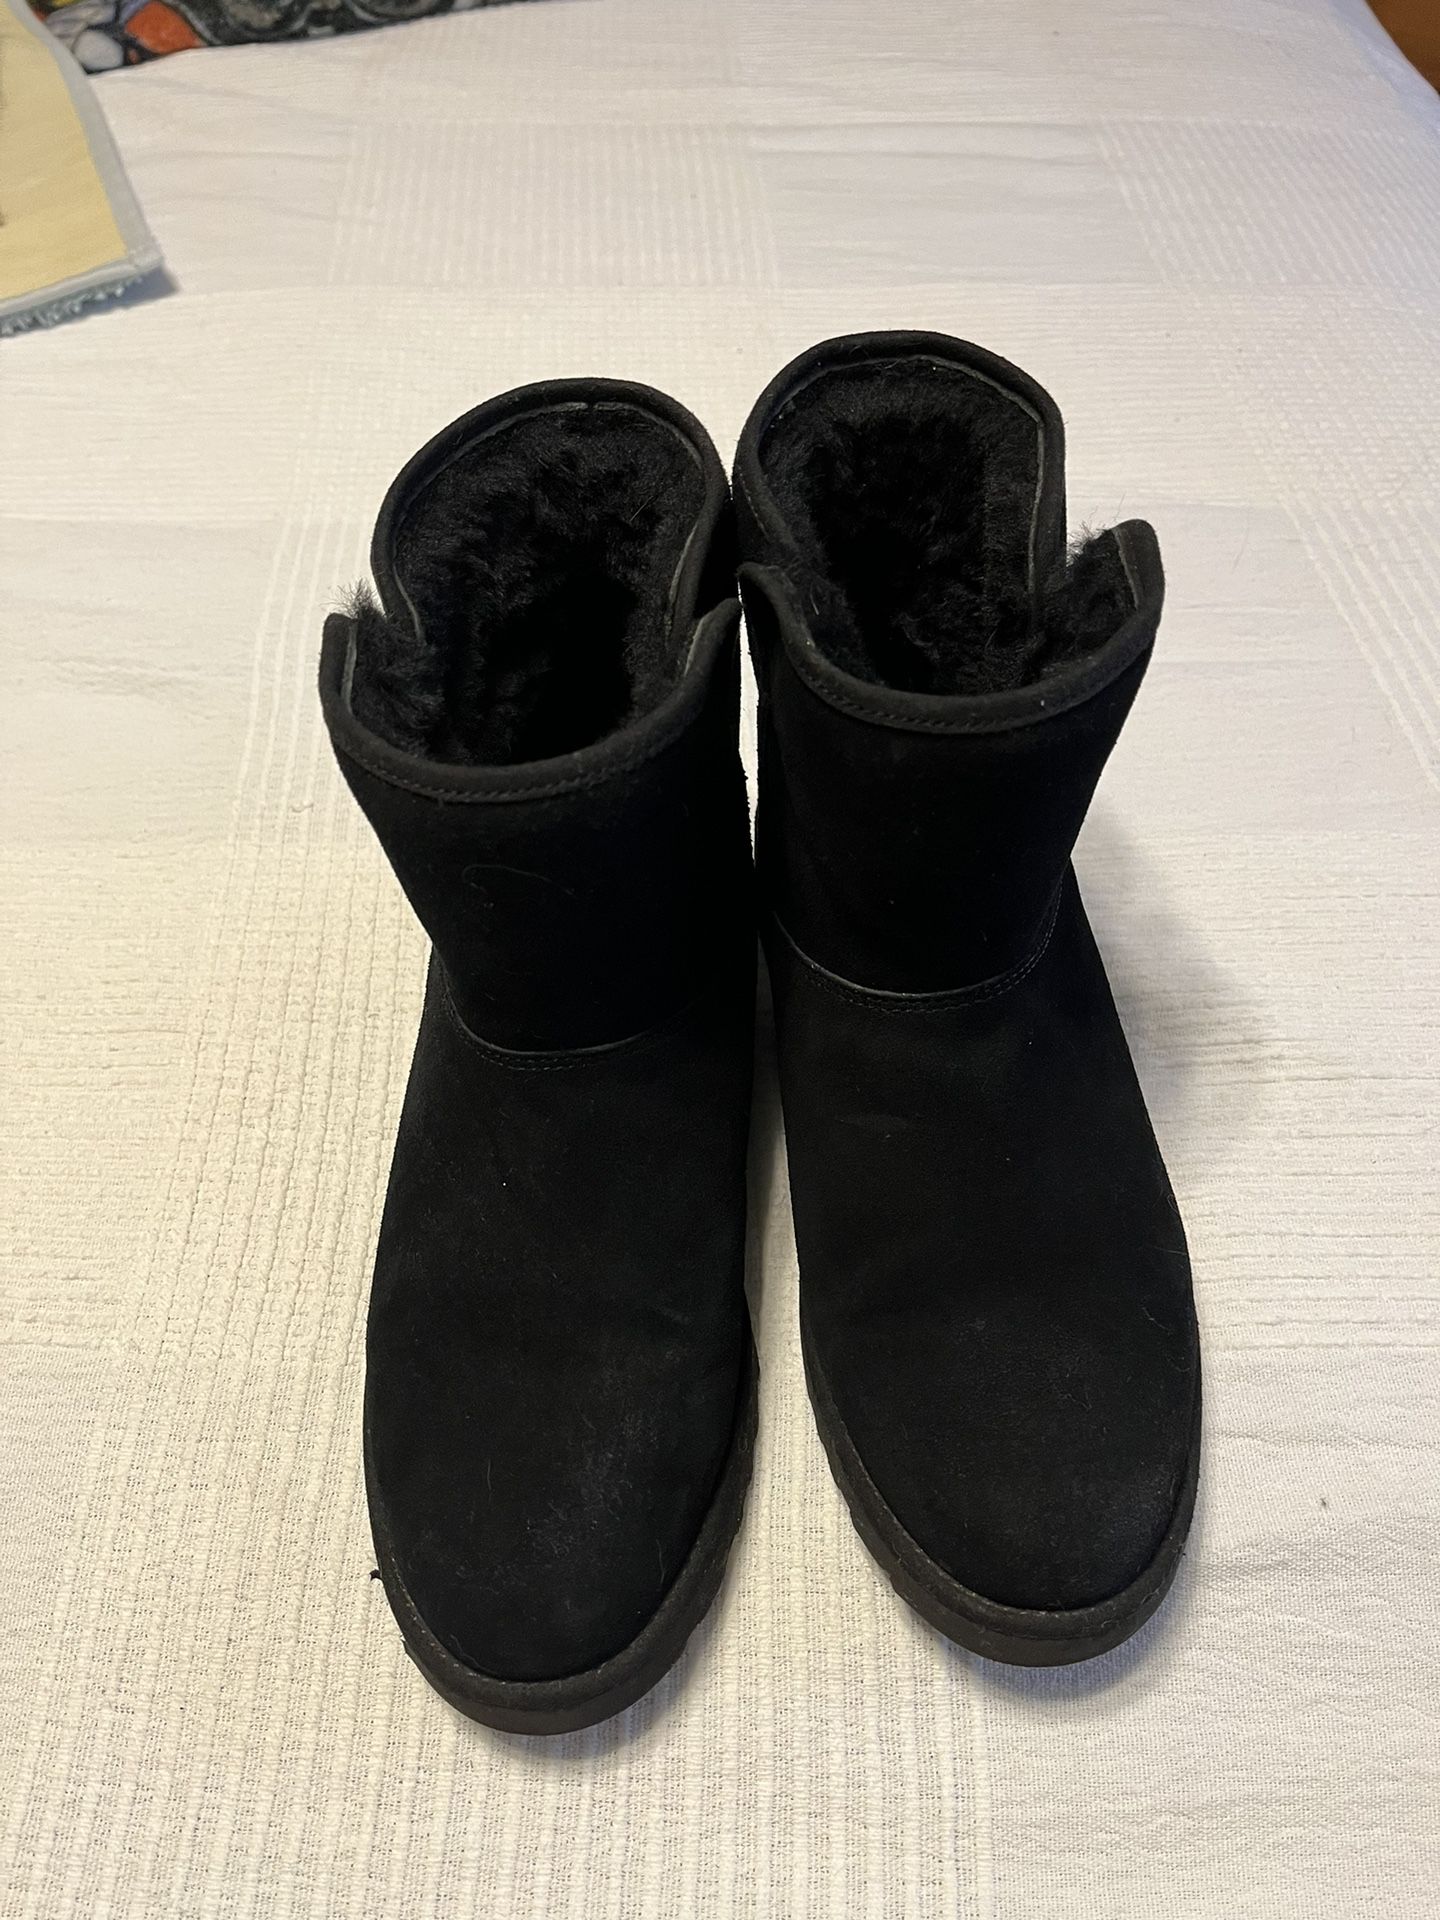 Women’s Ugg Mini Boots. Size 7.5